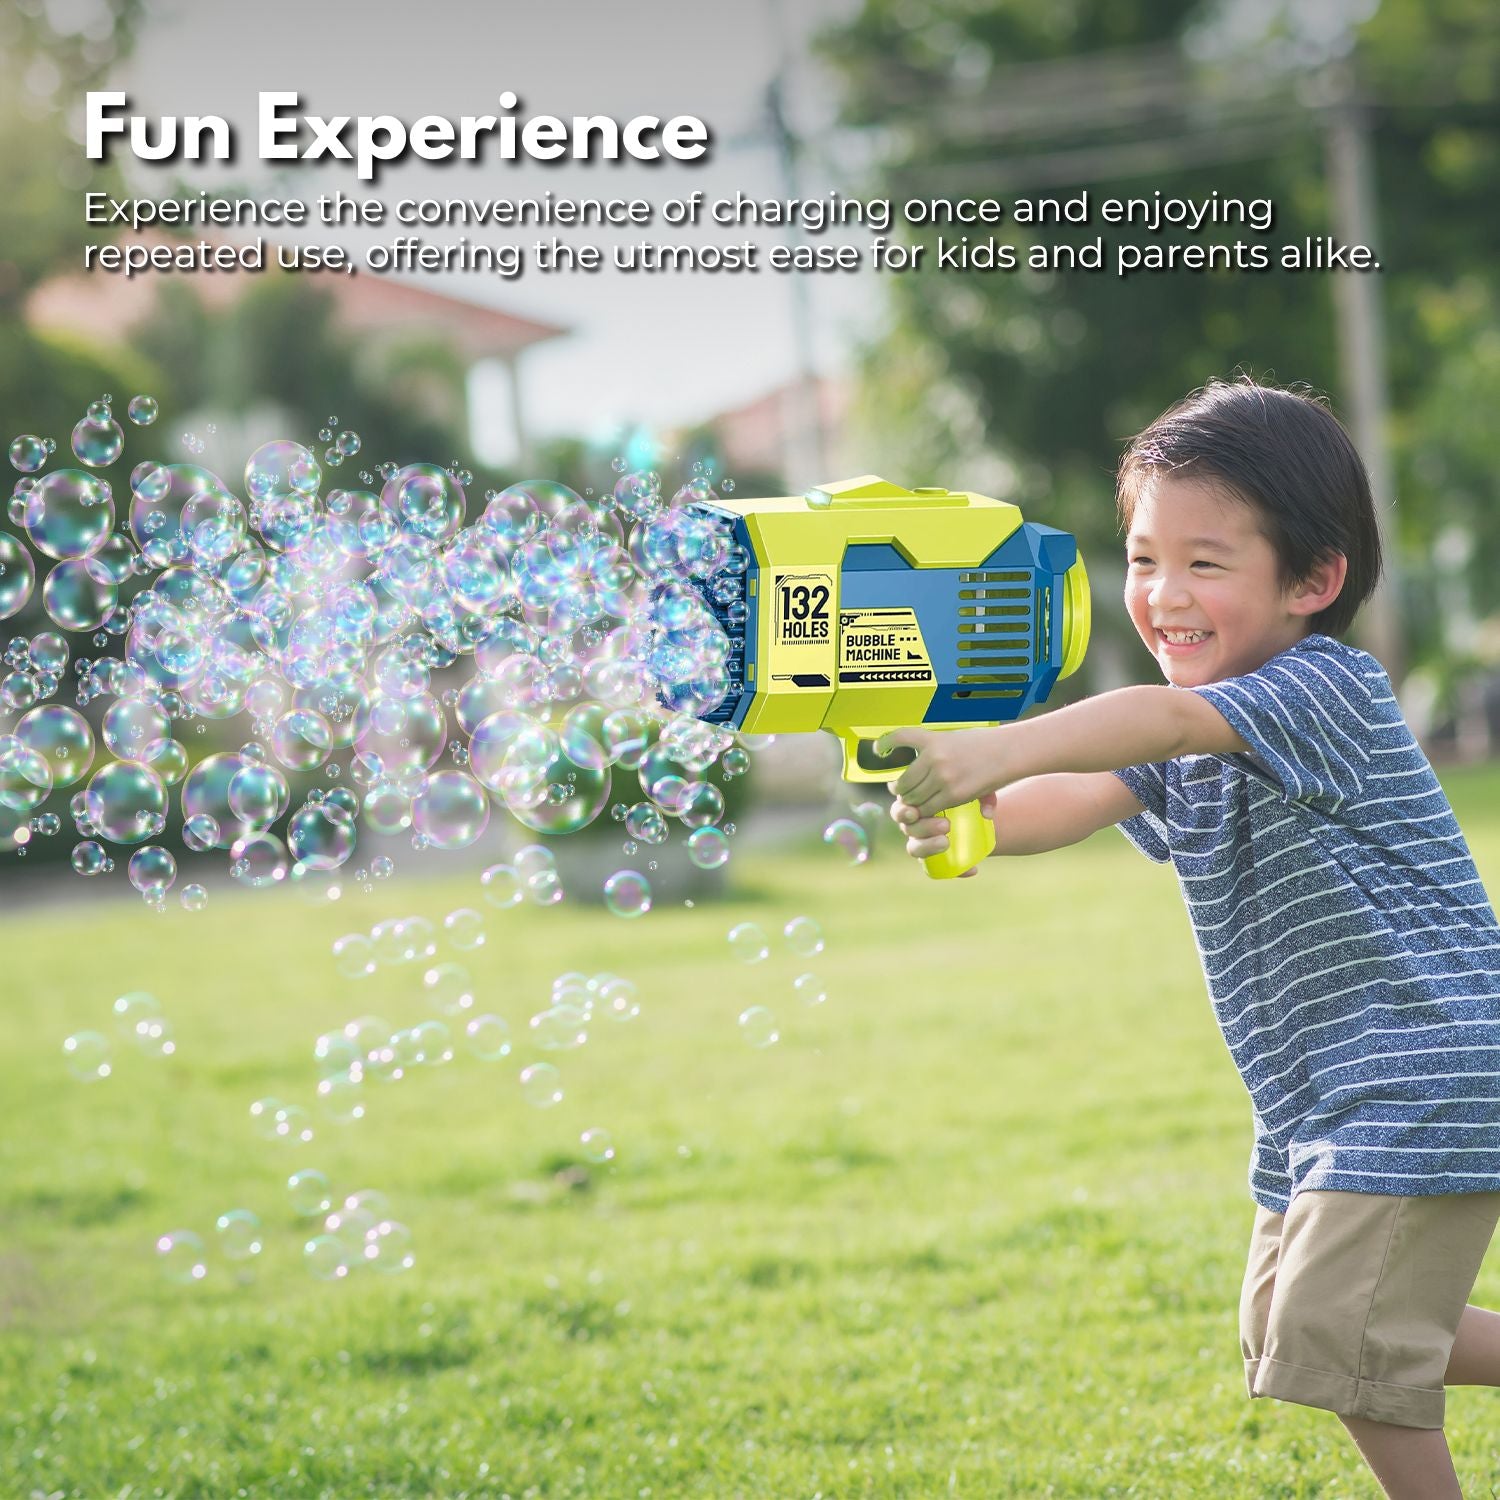 GOMINIMO 132 Holes Bubbles Machine Gun for Kids (Dark Blue and Green)